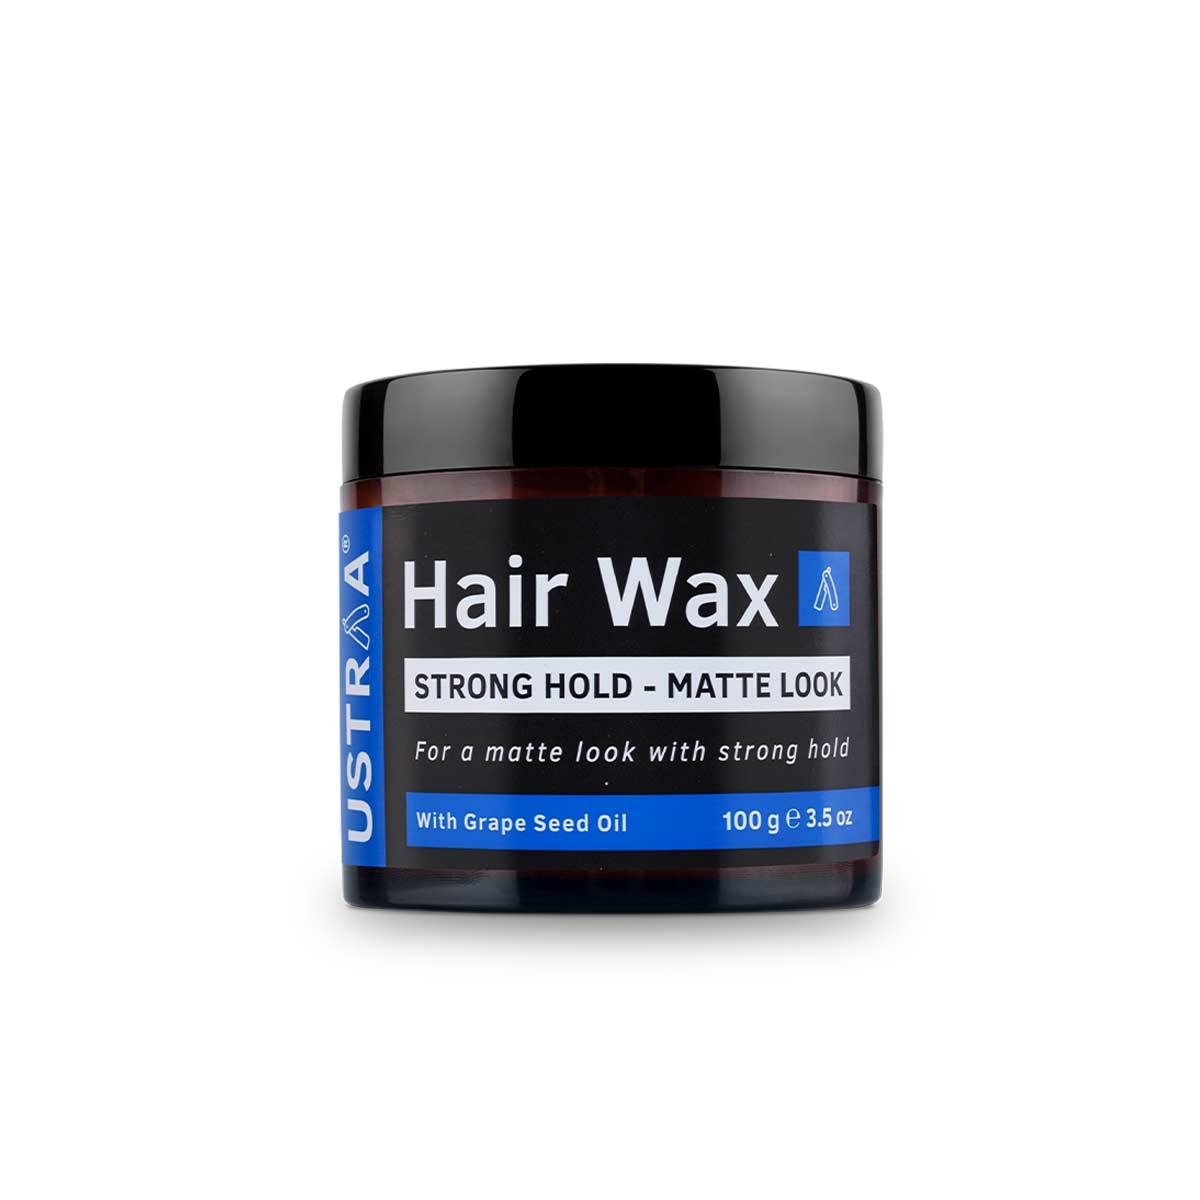 Ustraa Hair Vitalizer Shampoo - 250ml & Hair Wax - Strong Hold, Matte Look - 100g 
